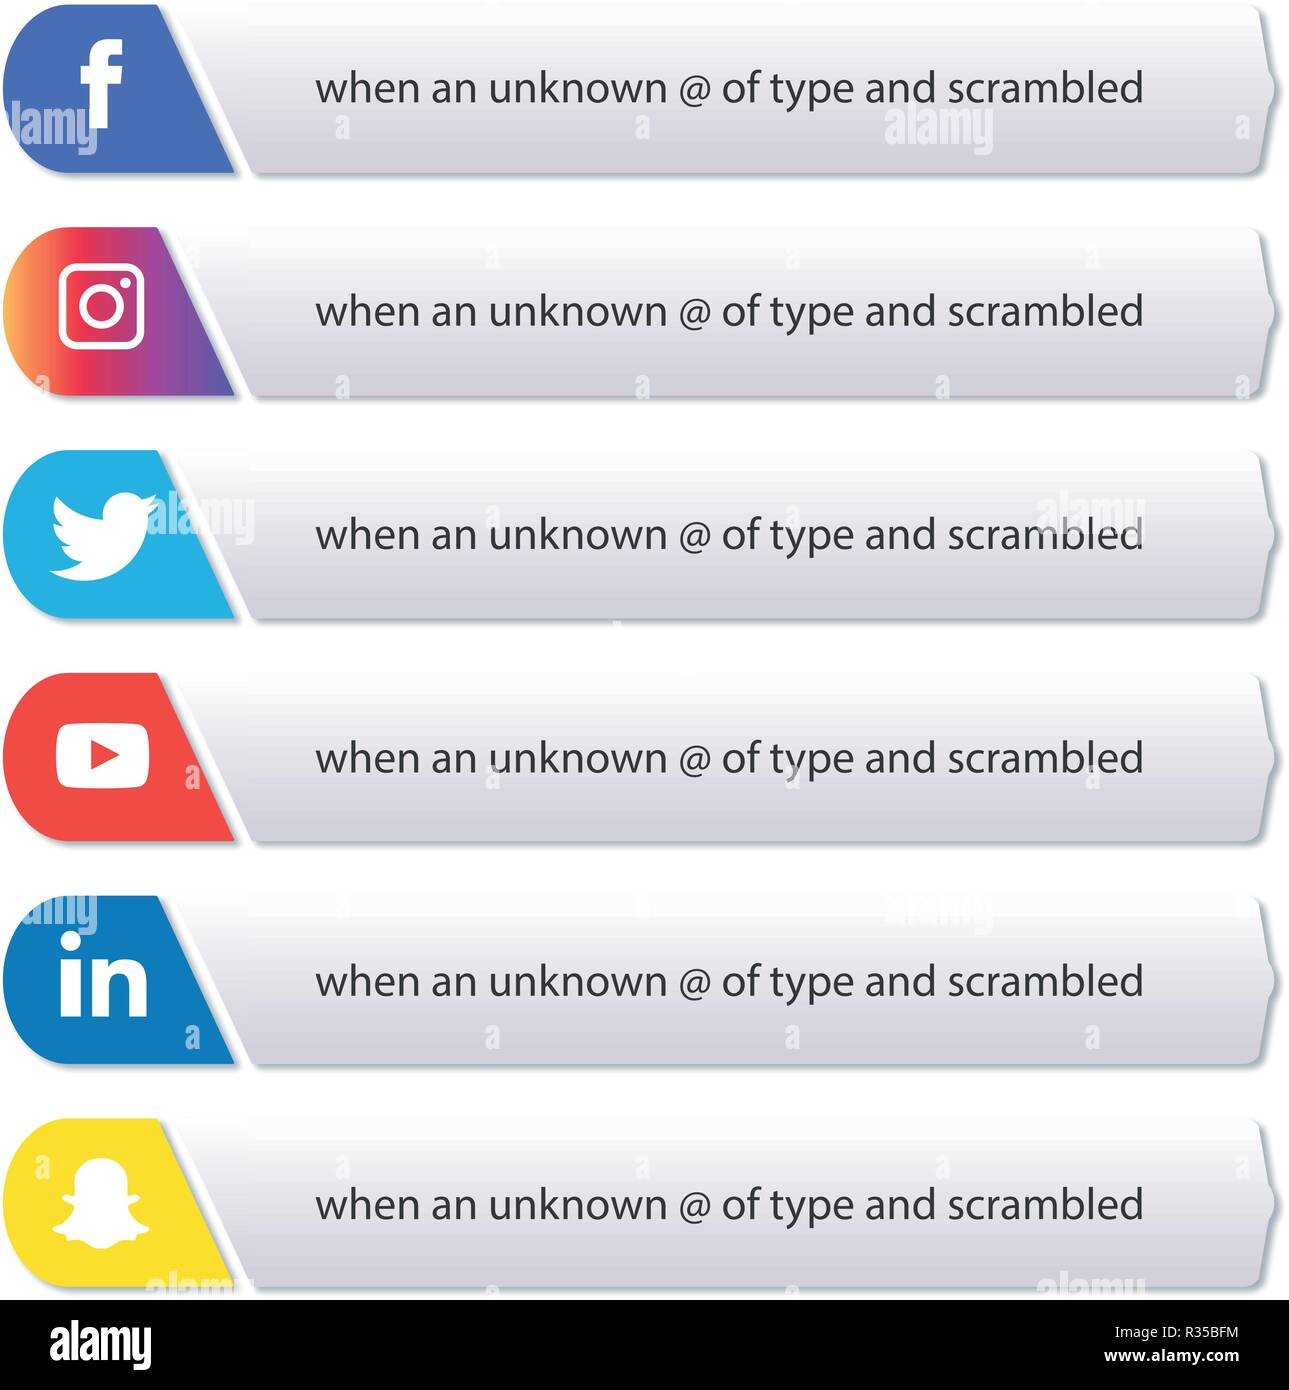 Social Media Icons Set Logo Vector Illustrator Facebook Instagram Twitter Whatsapp Communication Google Plus Device Youtube Smart Phone Net Stock Vector Image Art Alamy